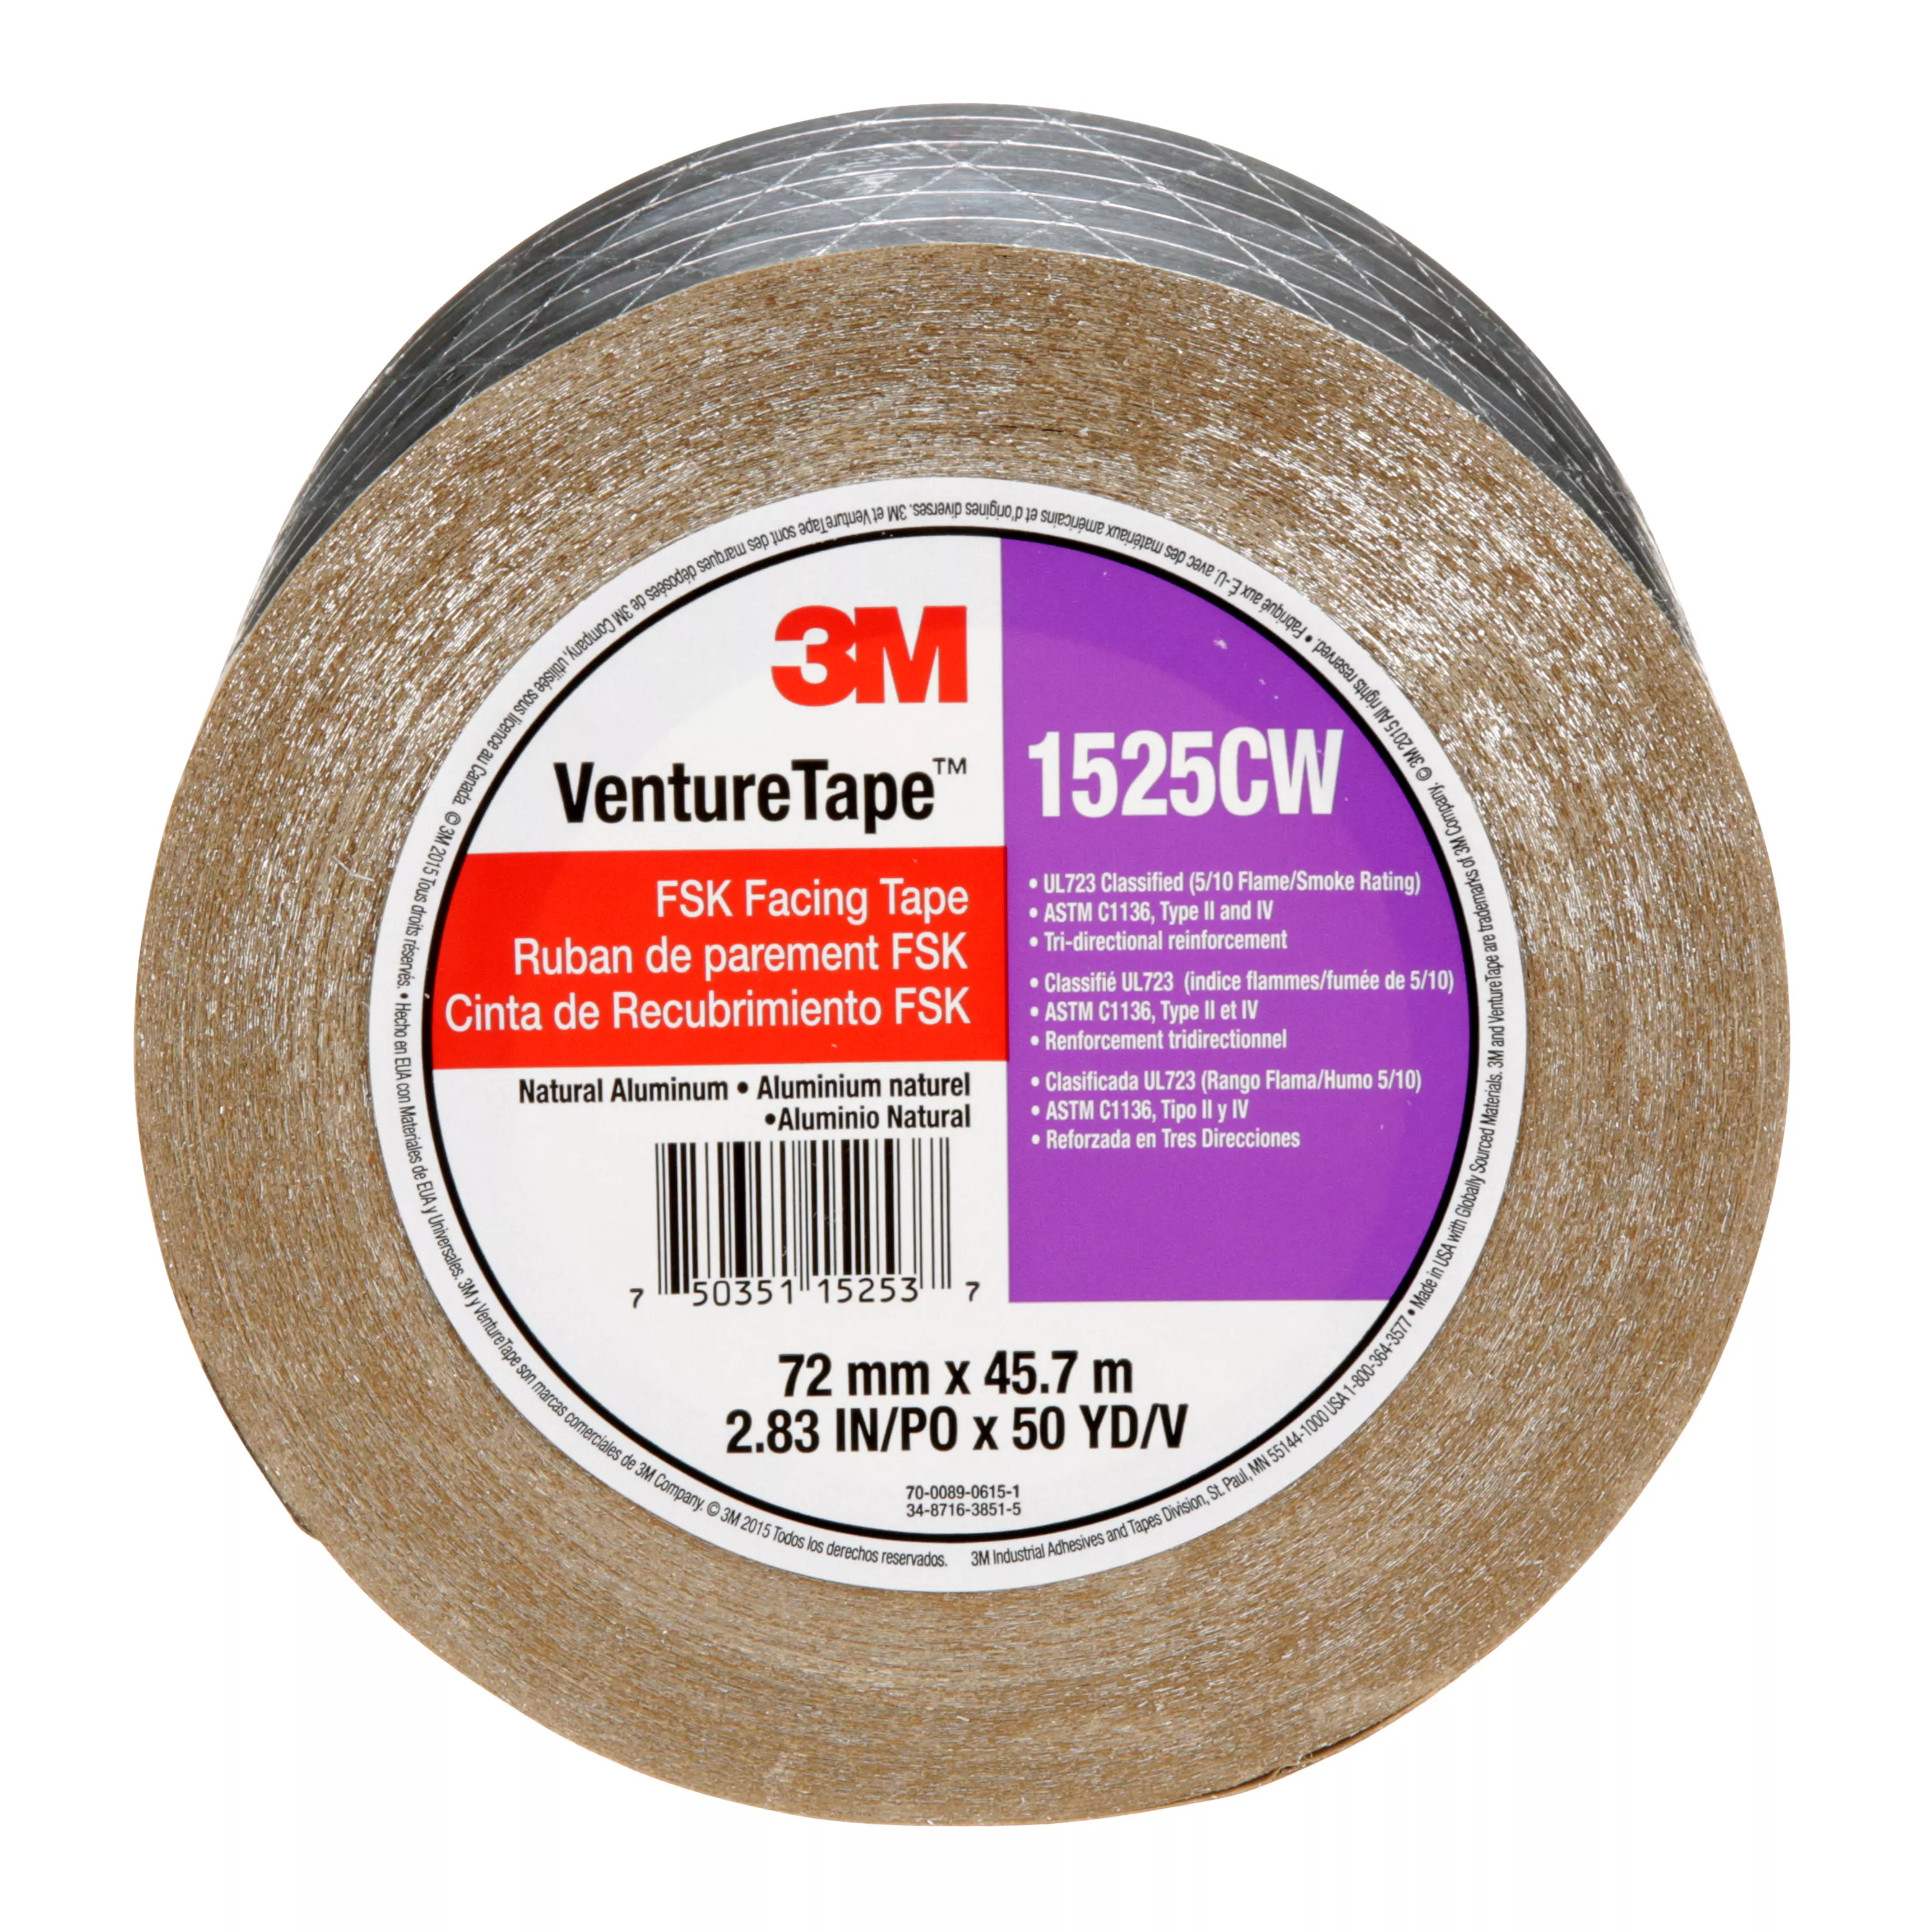 3M™ Venture Tape™ FSK Facing Tape 1525CW, Silver, 72 mm x 45.7 m, 16
Rolls/Case